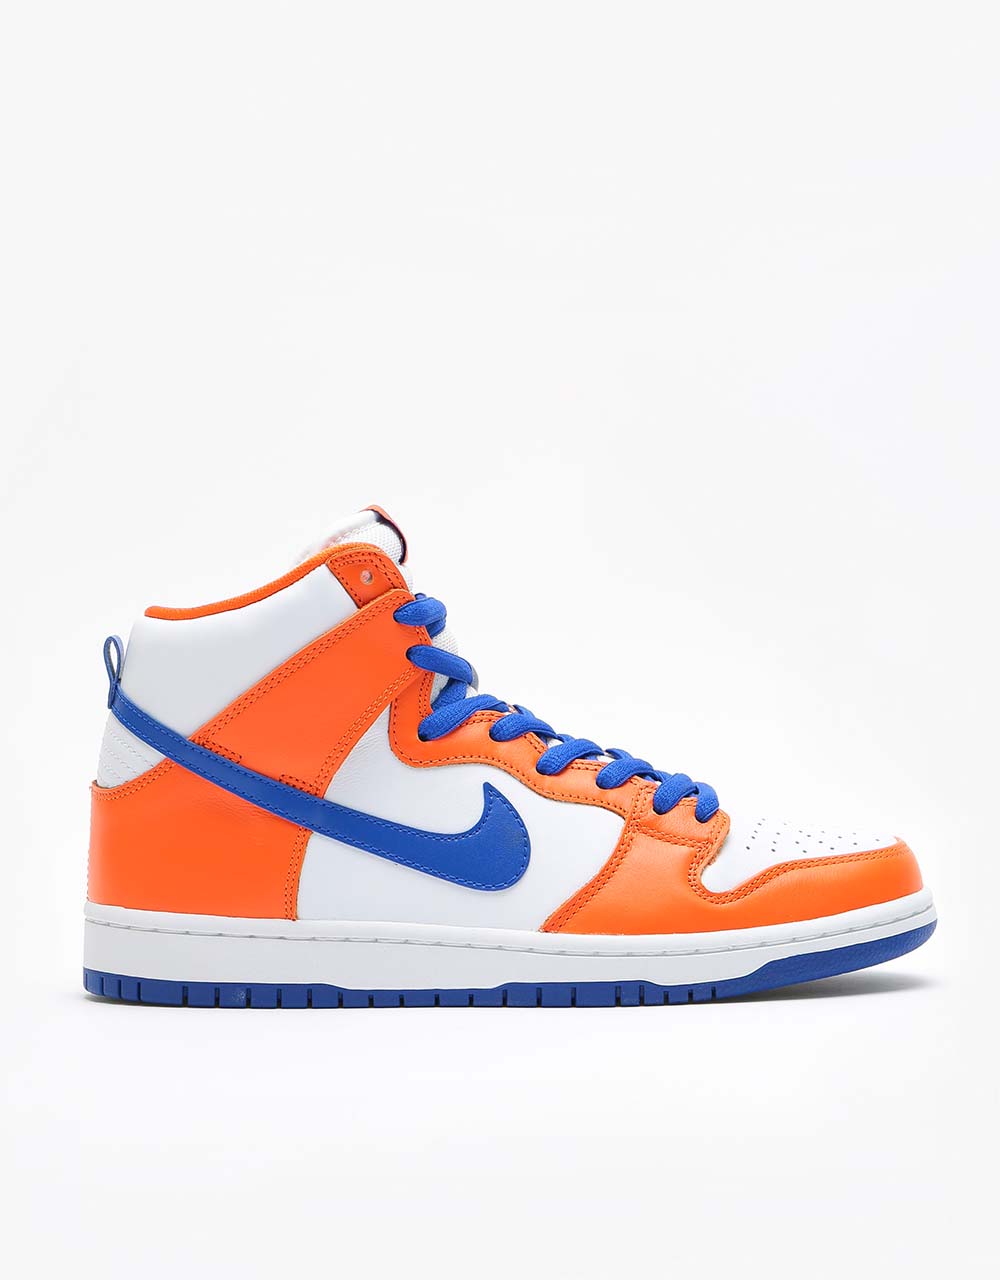 Nike SB Dunk High 'Supa' QS Skate Shoes - Safety Orange/Hyper Blue-Whi ...